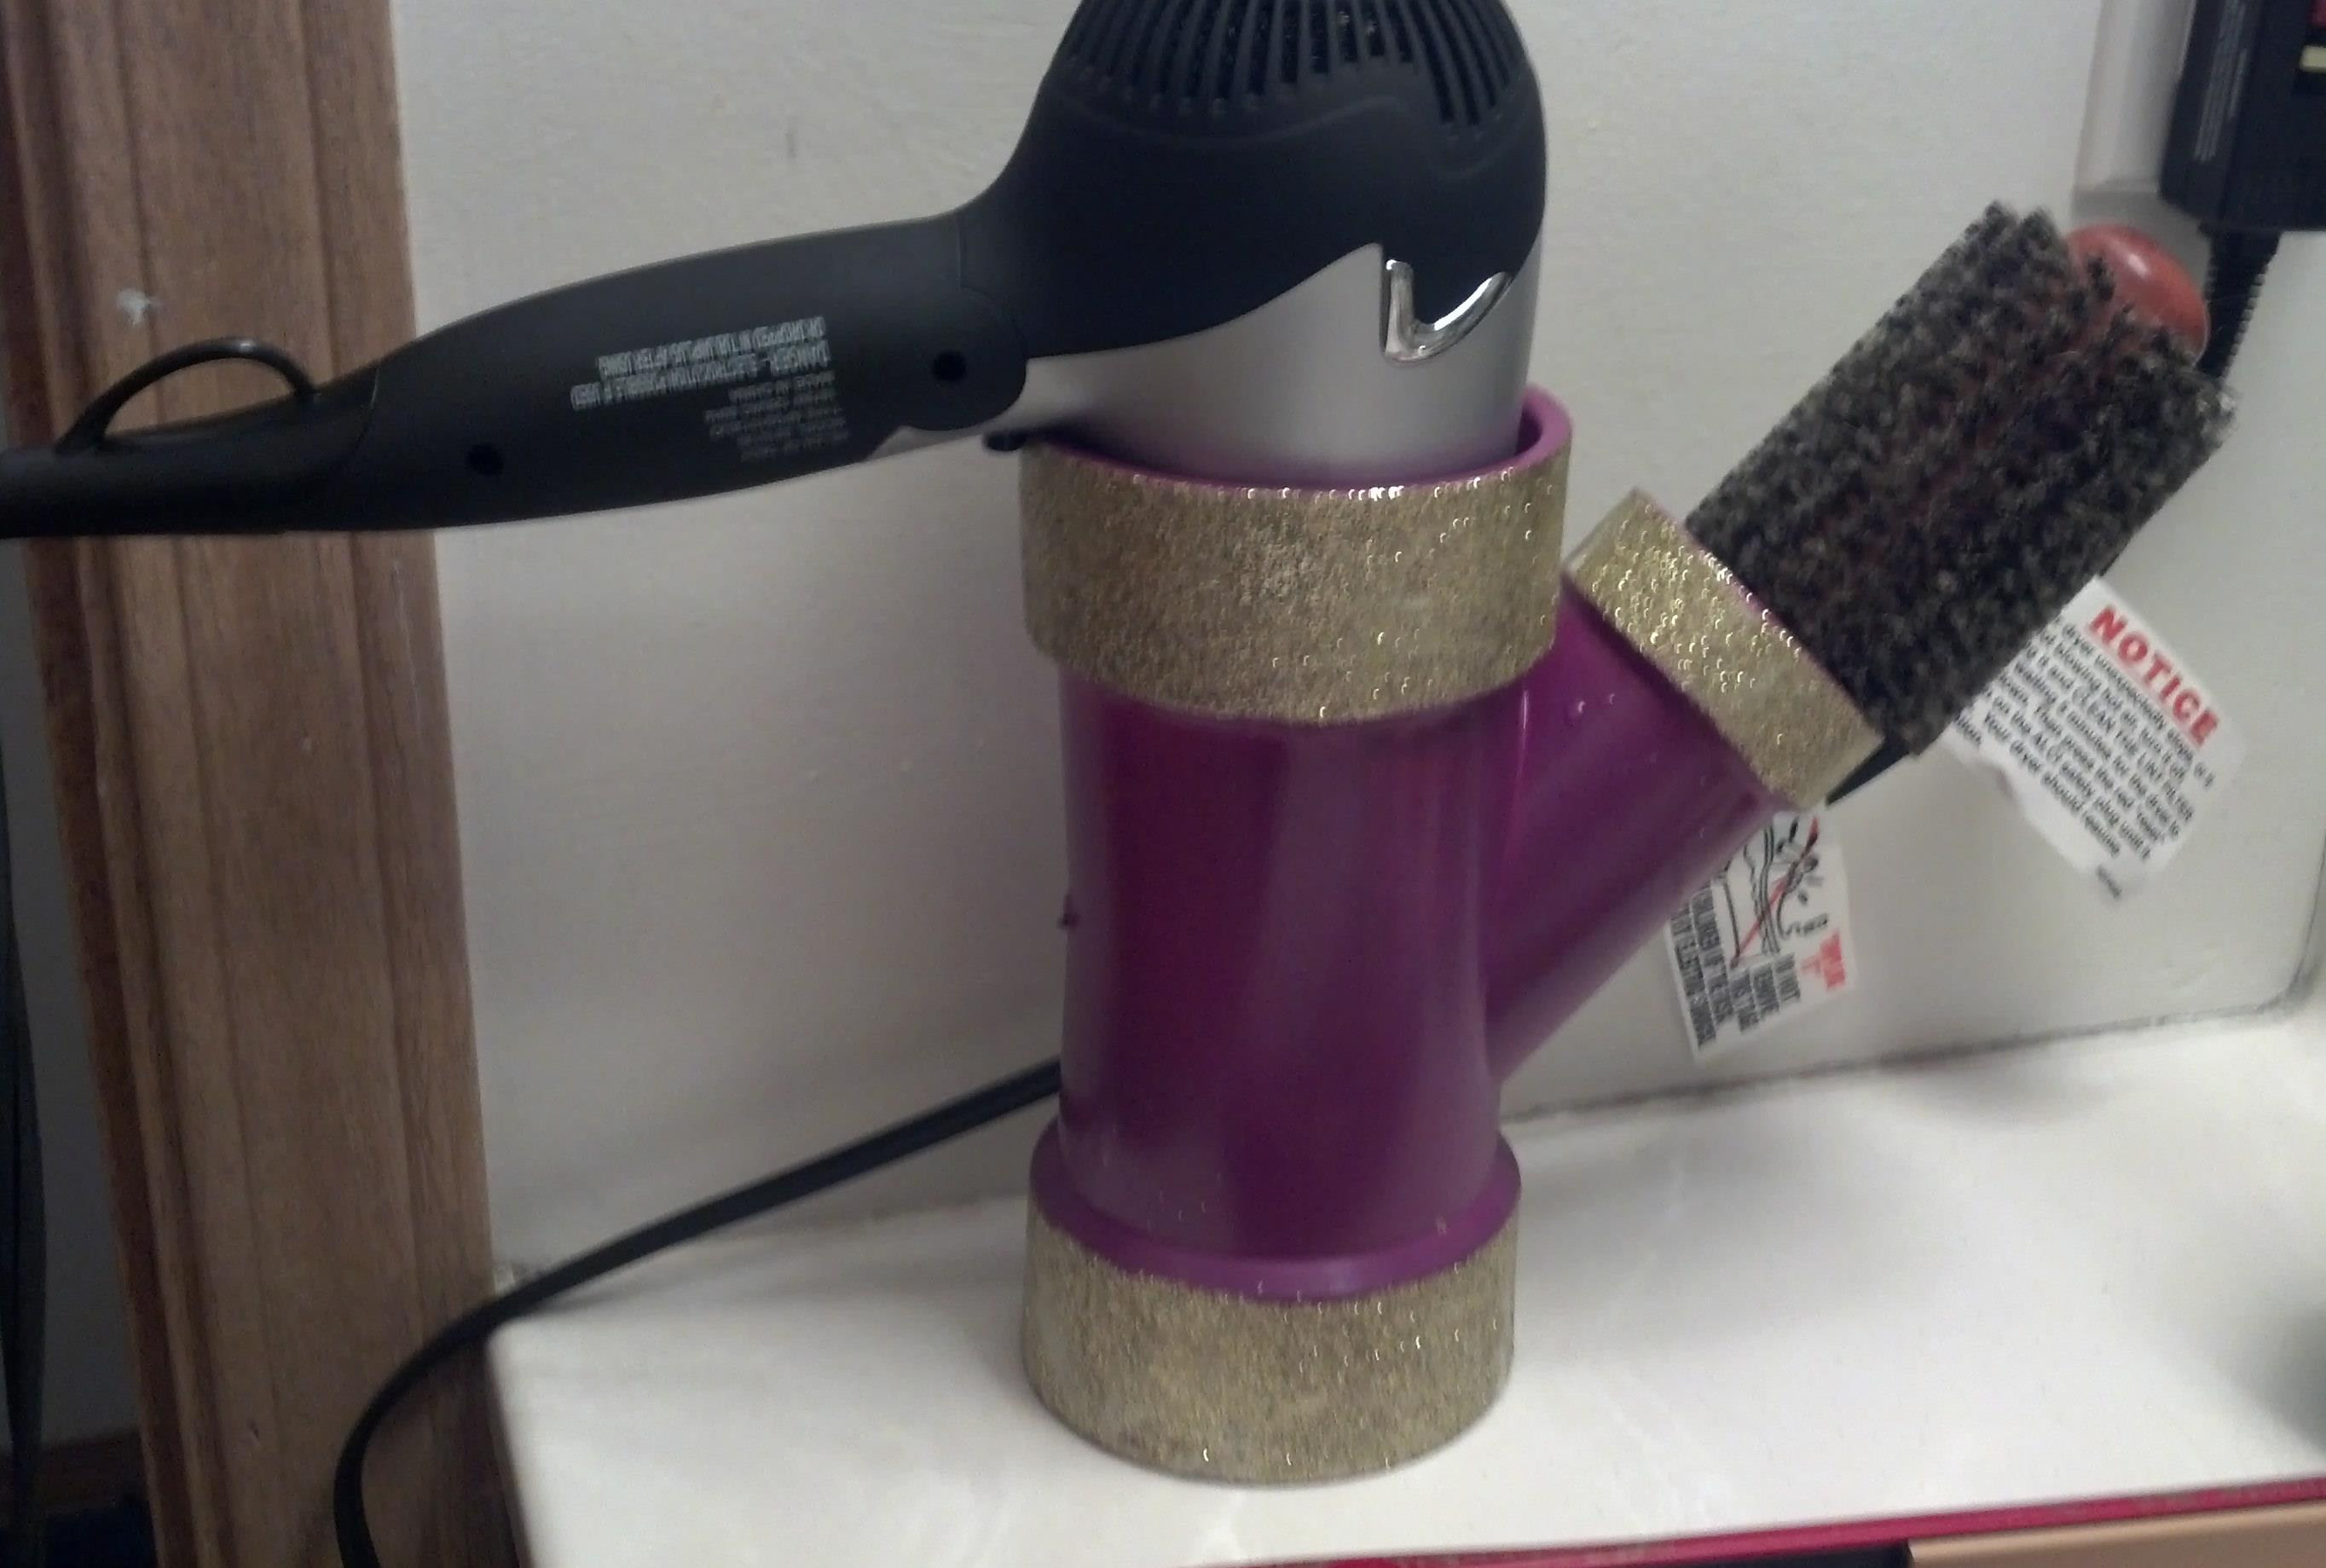 Best ideas about DIY Hair Dryer Holder
. Save or Pin DIY Hairdryer Holder Now.